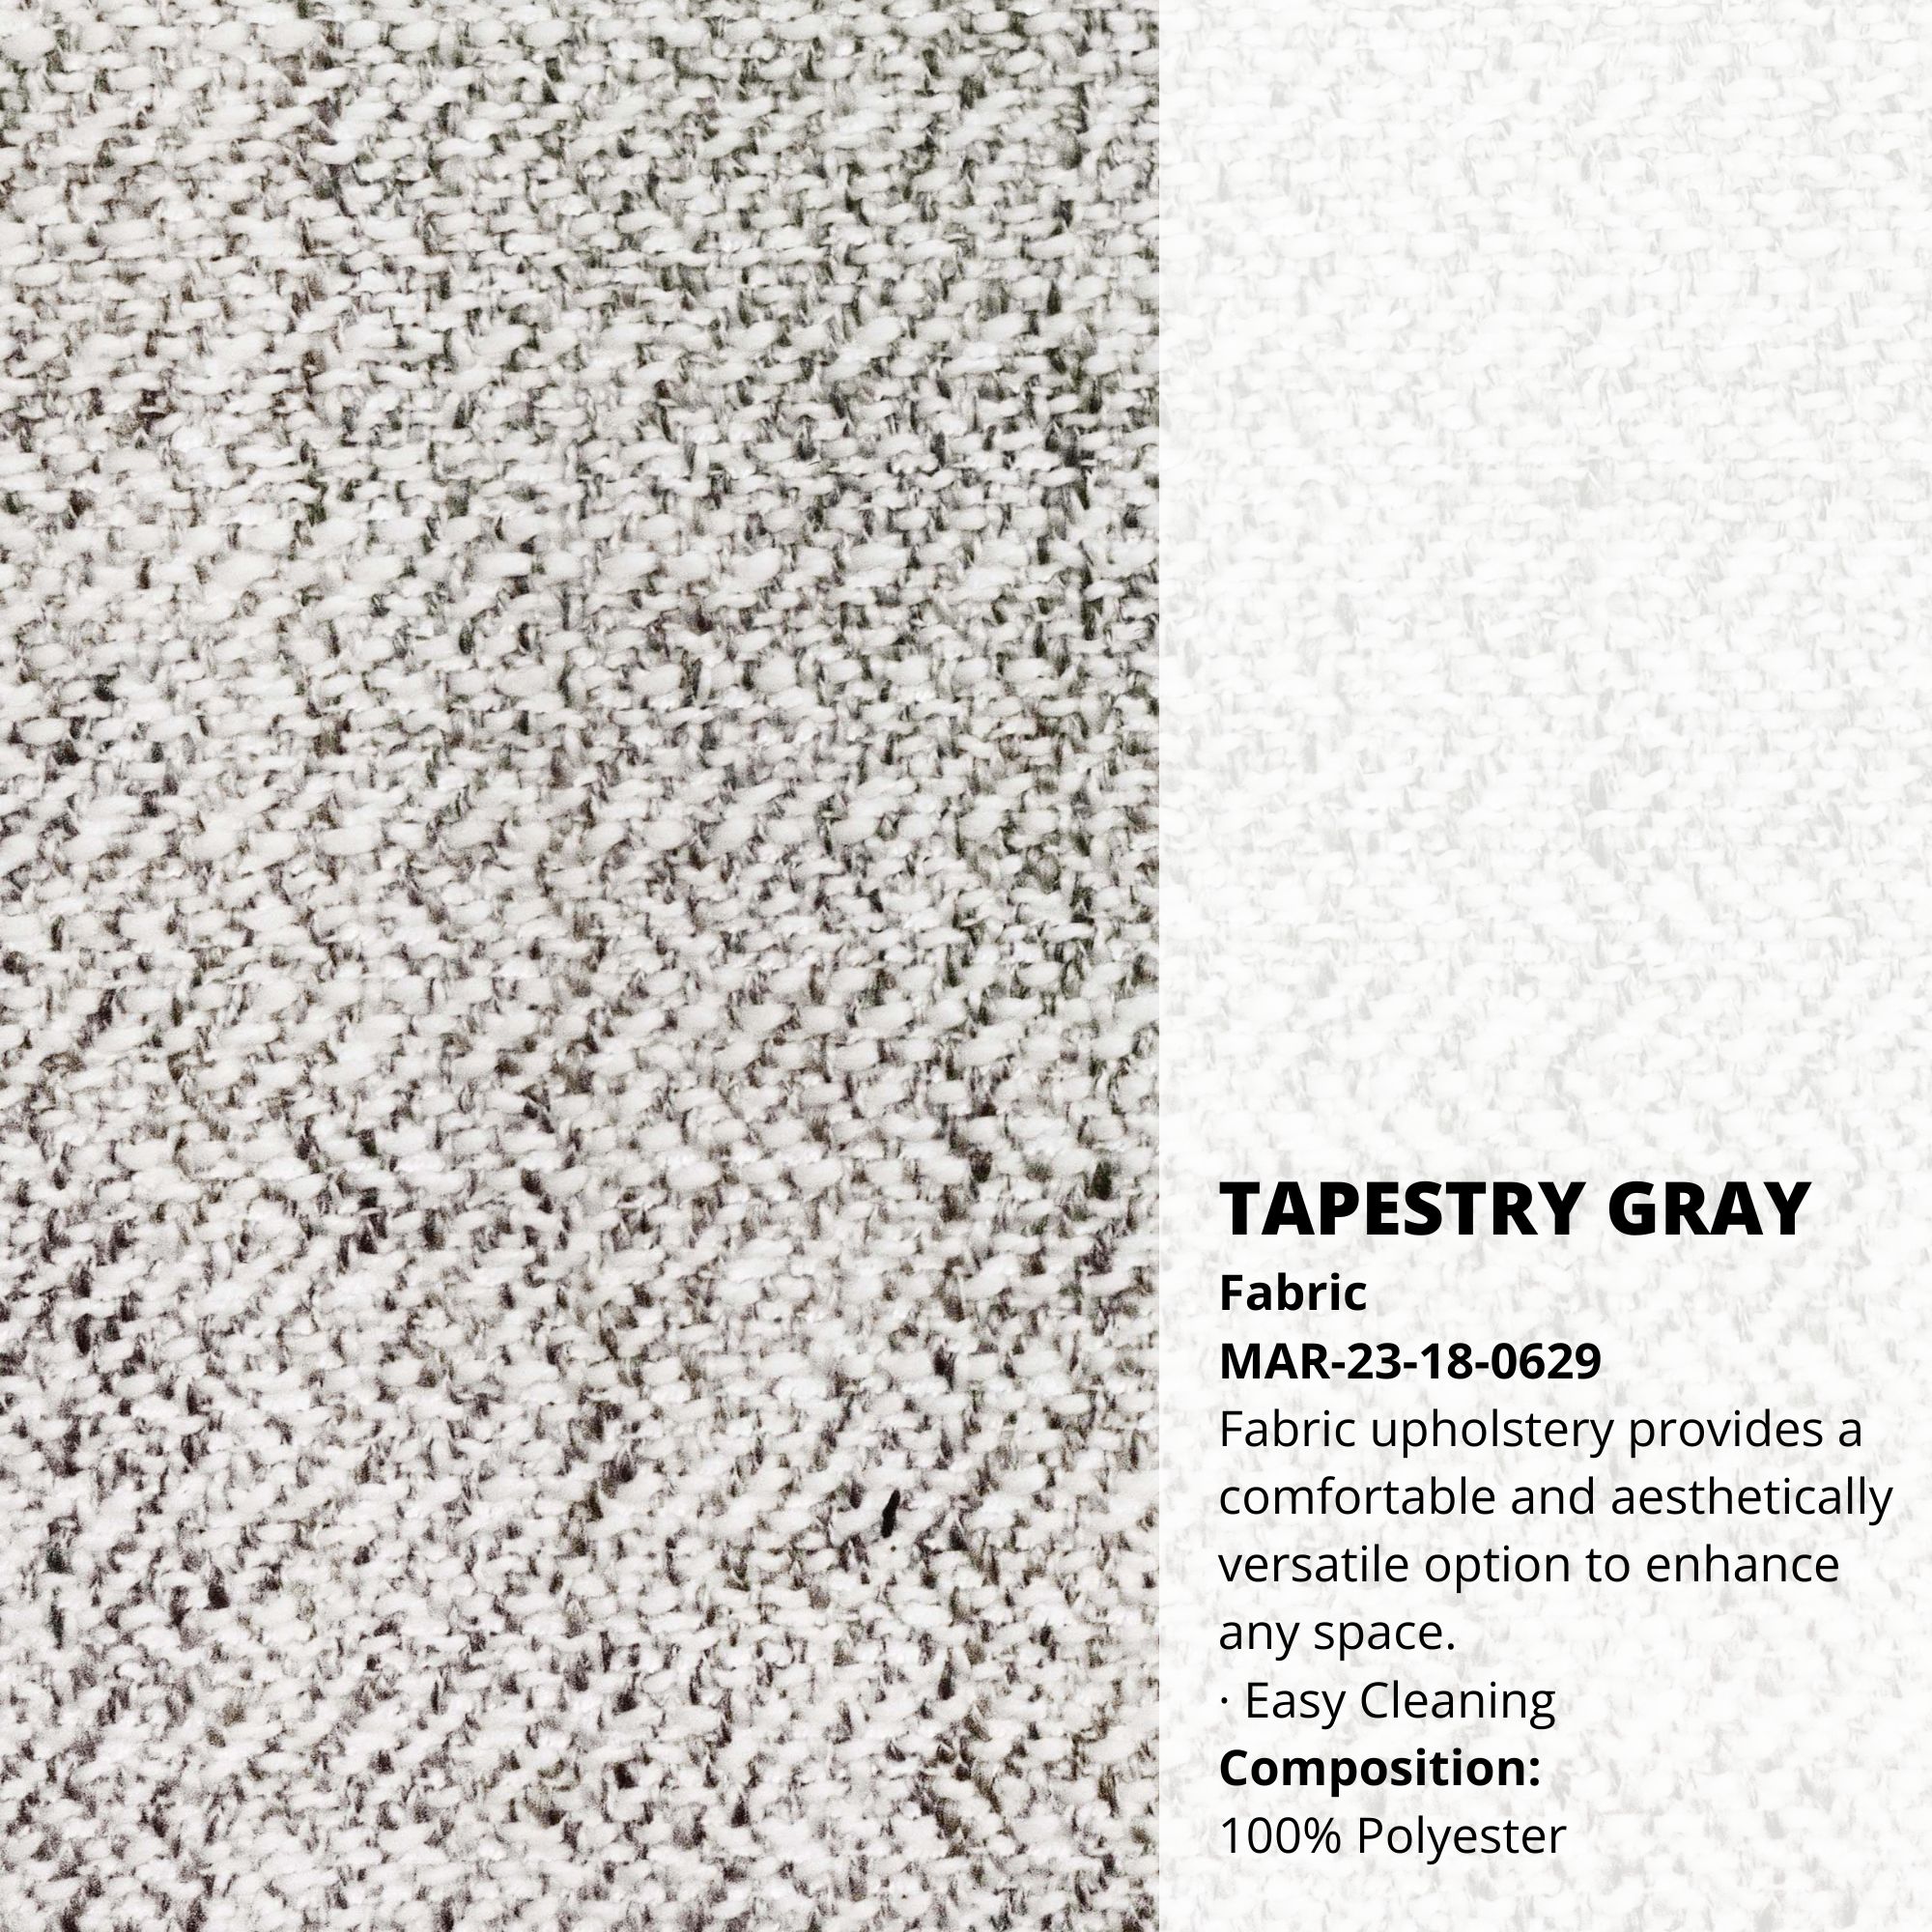 Tapestry Gray